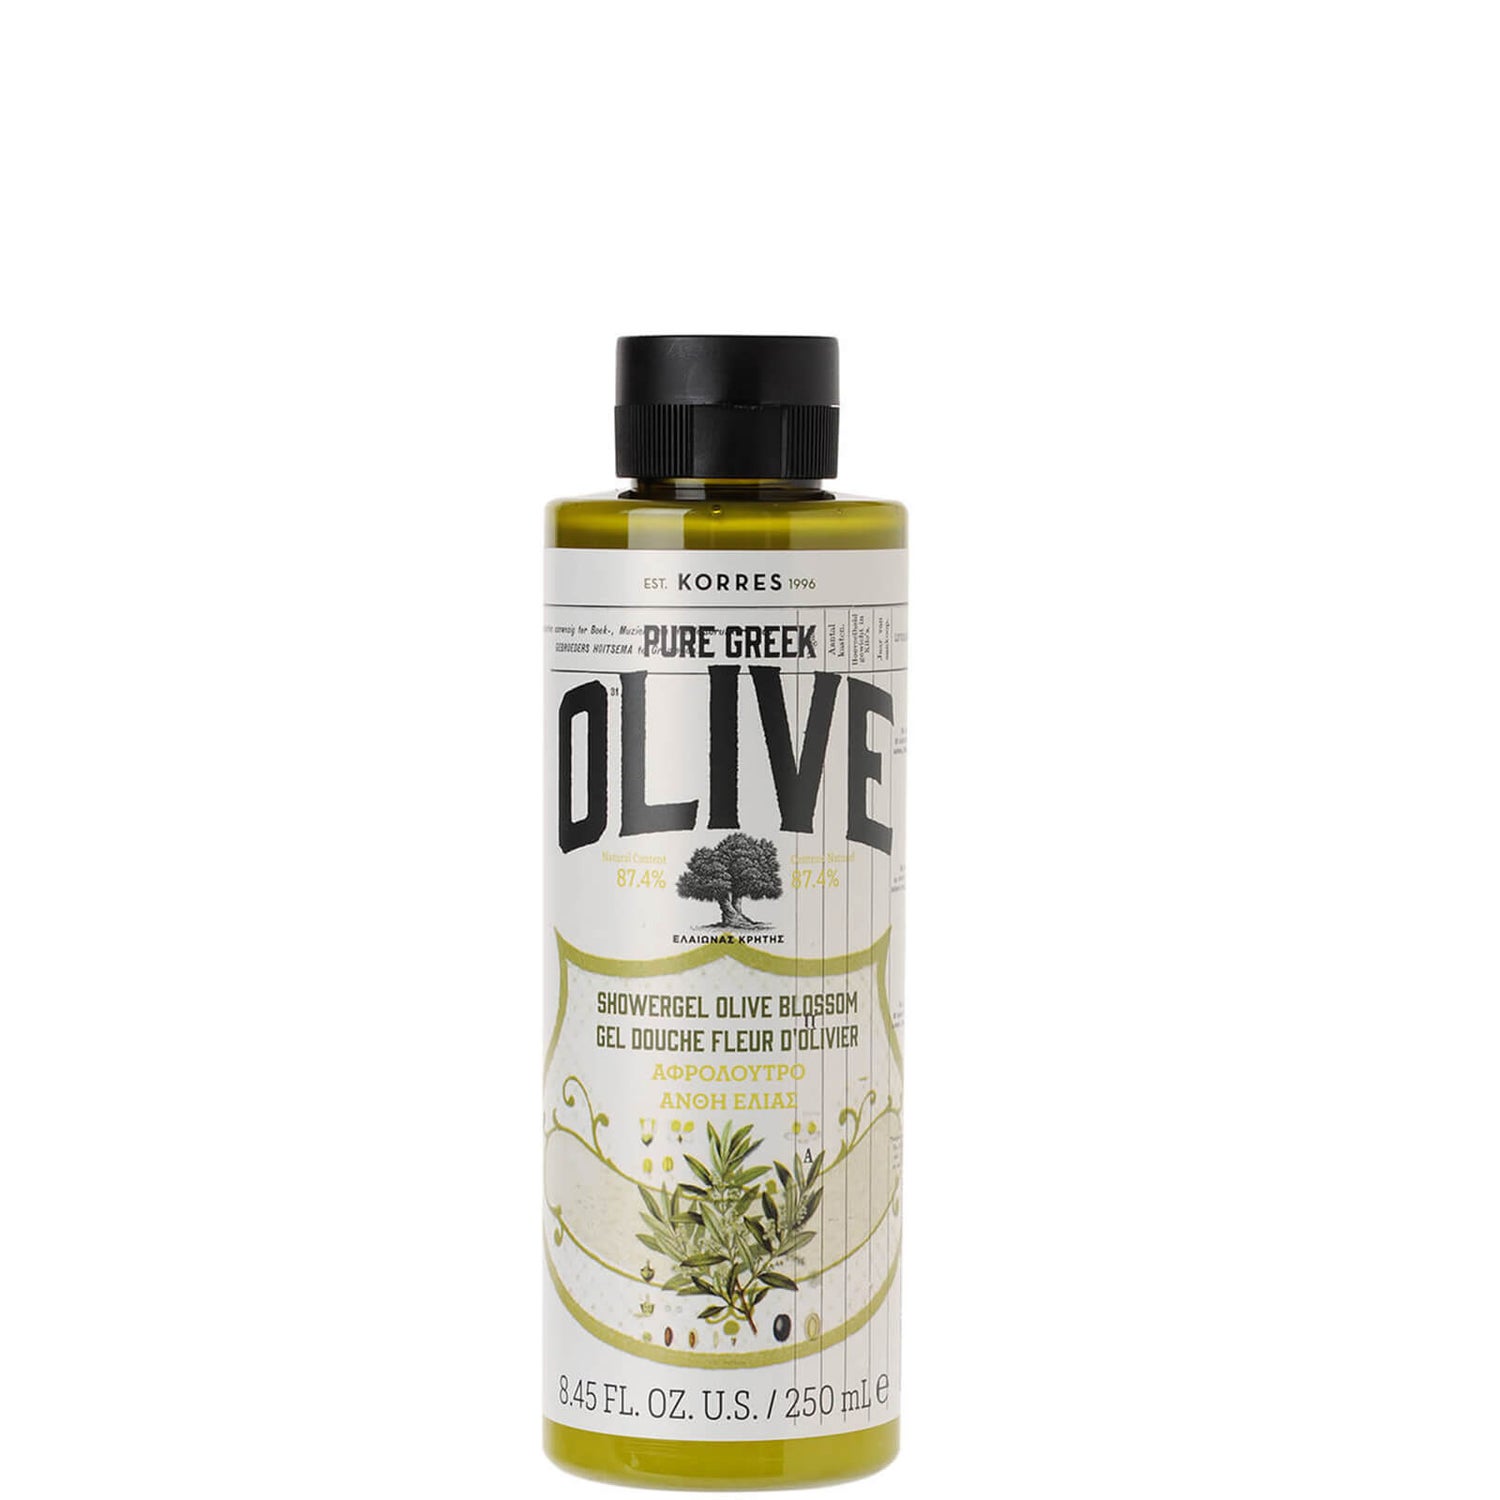 Gel de Banho com flor de oliveira OLIVE da KORRES 250 ml